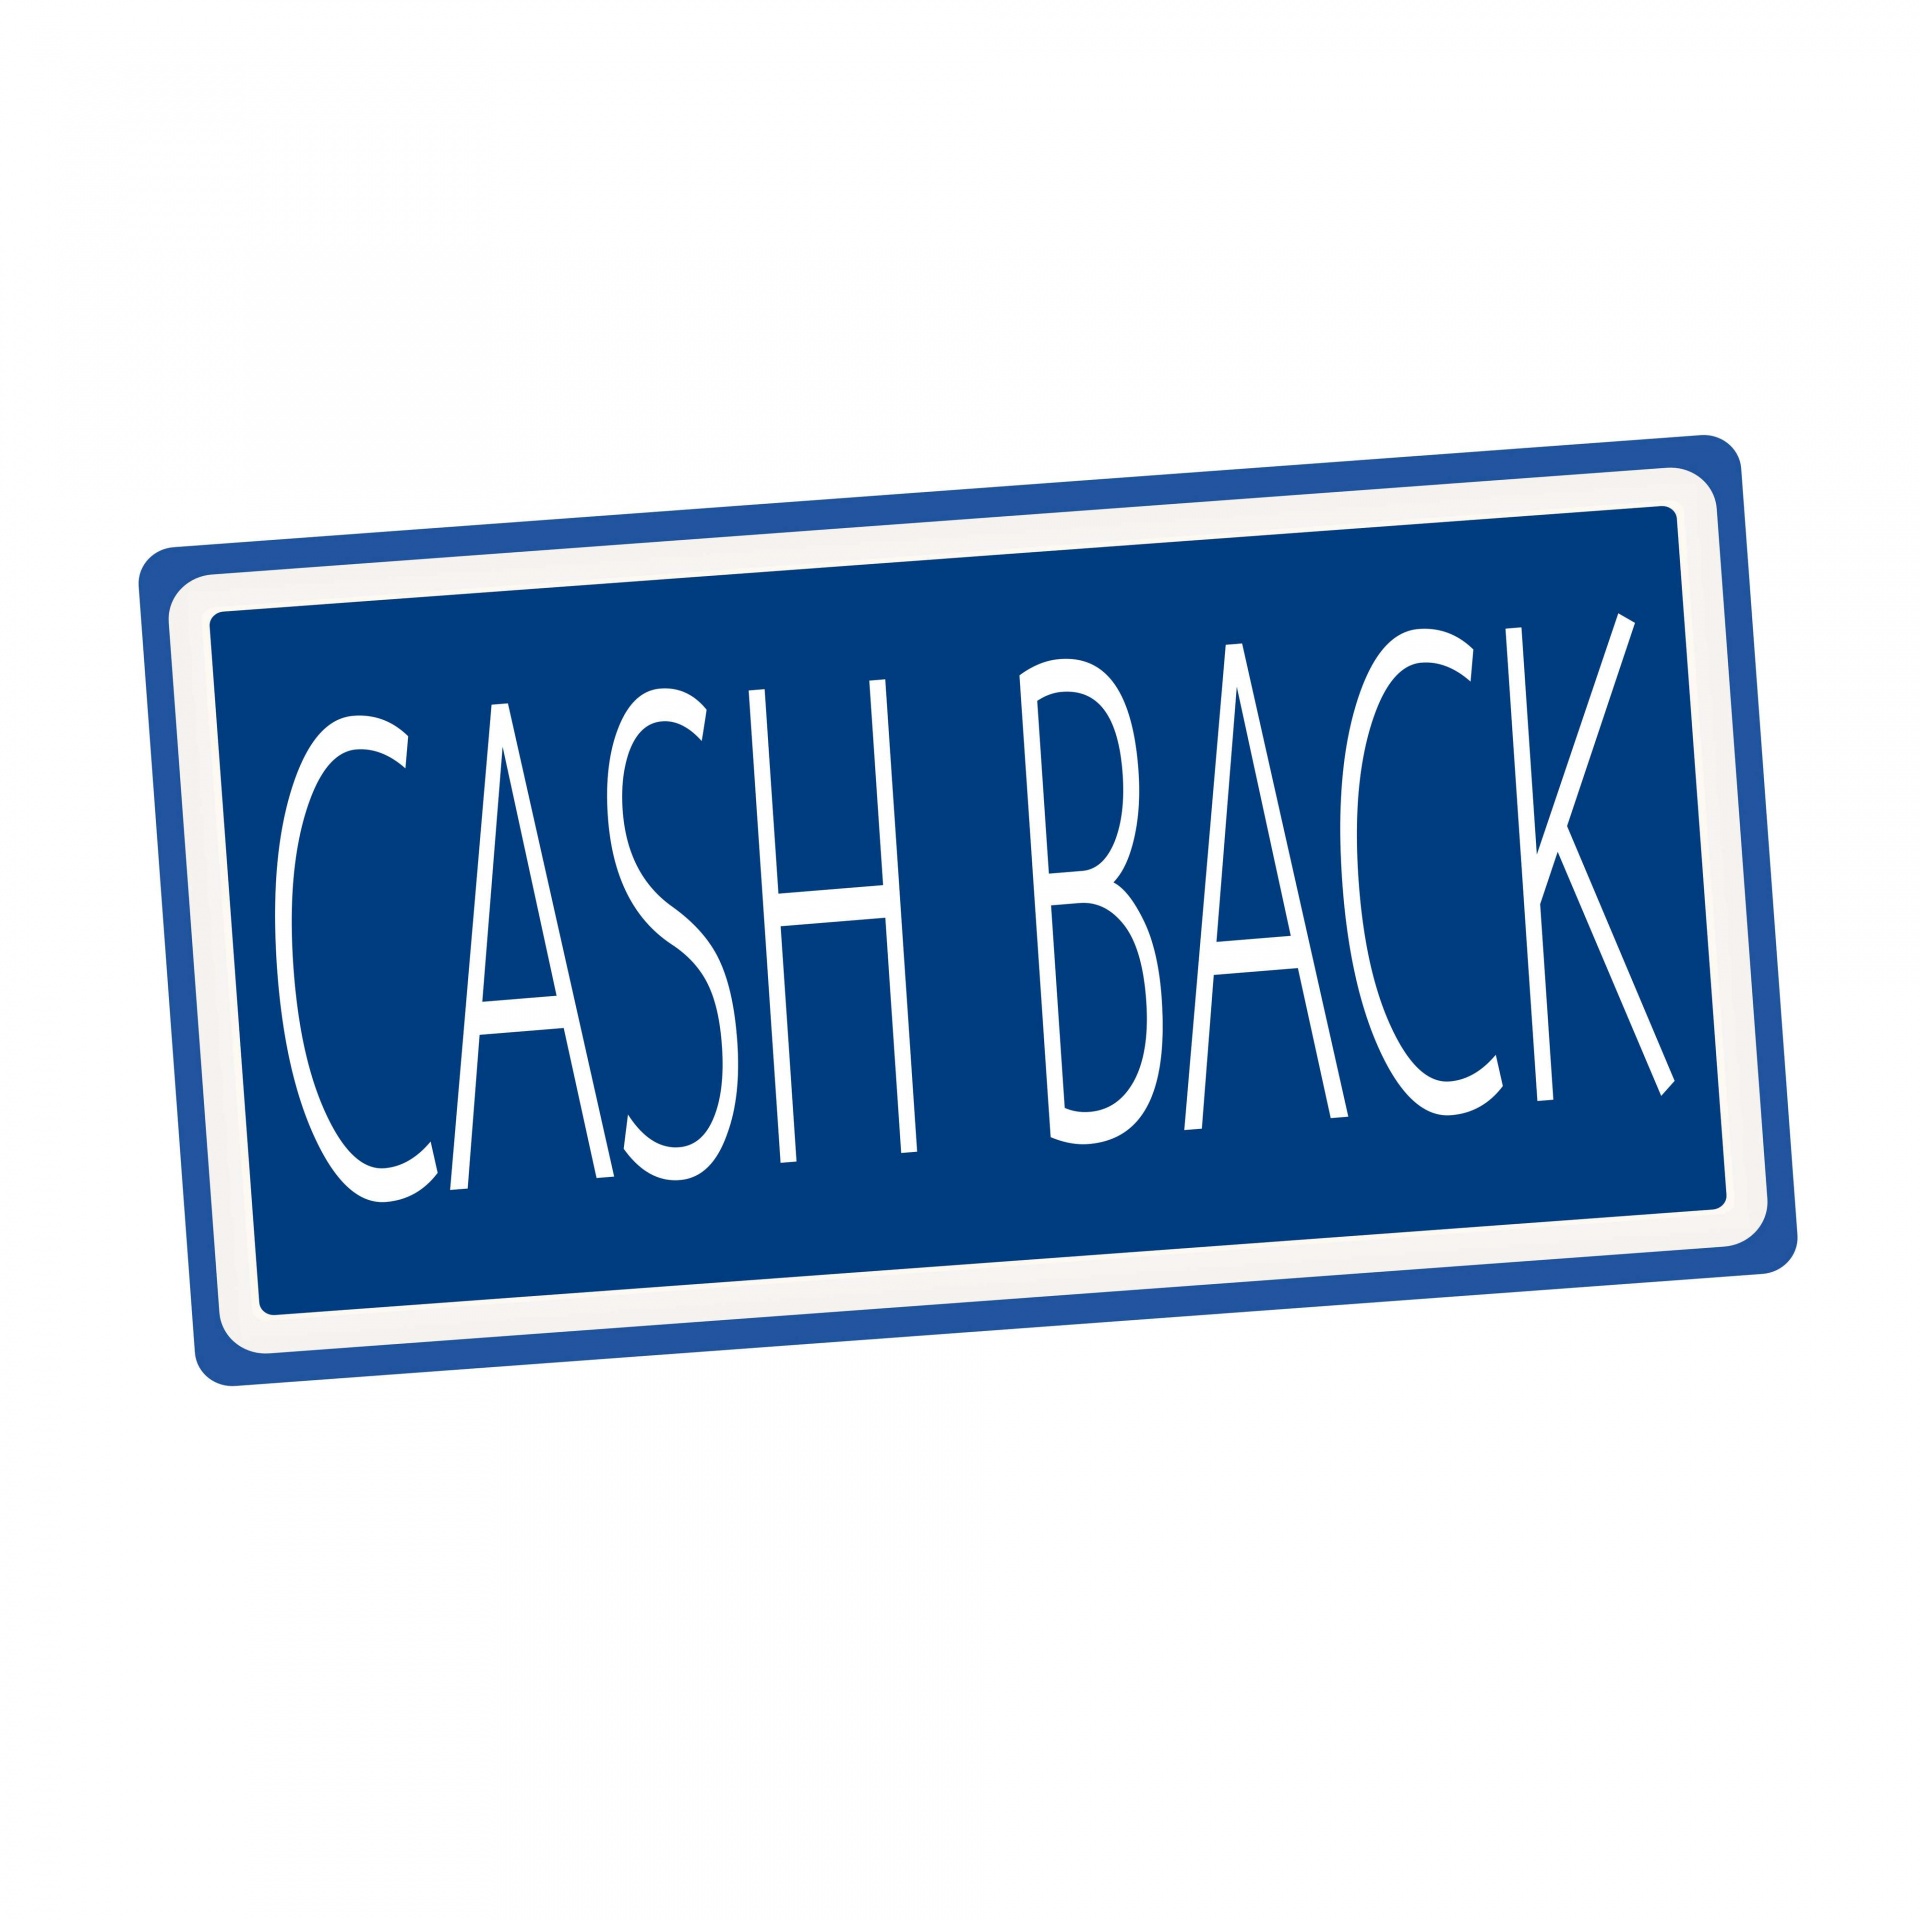 Cash back witte stempel tekst op blauw